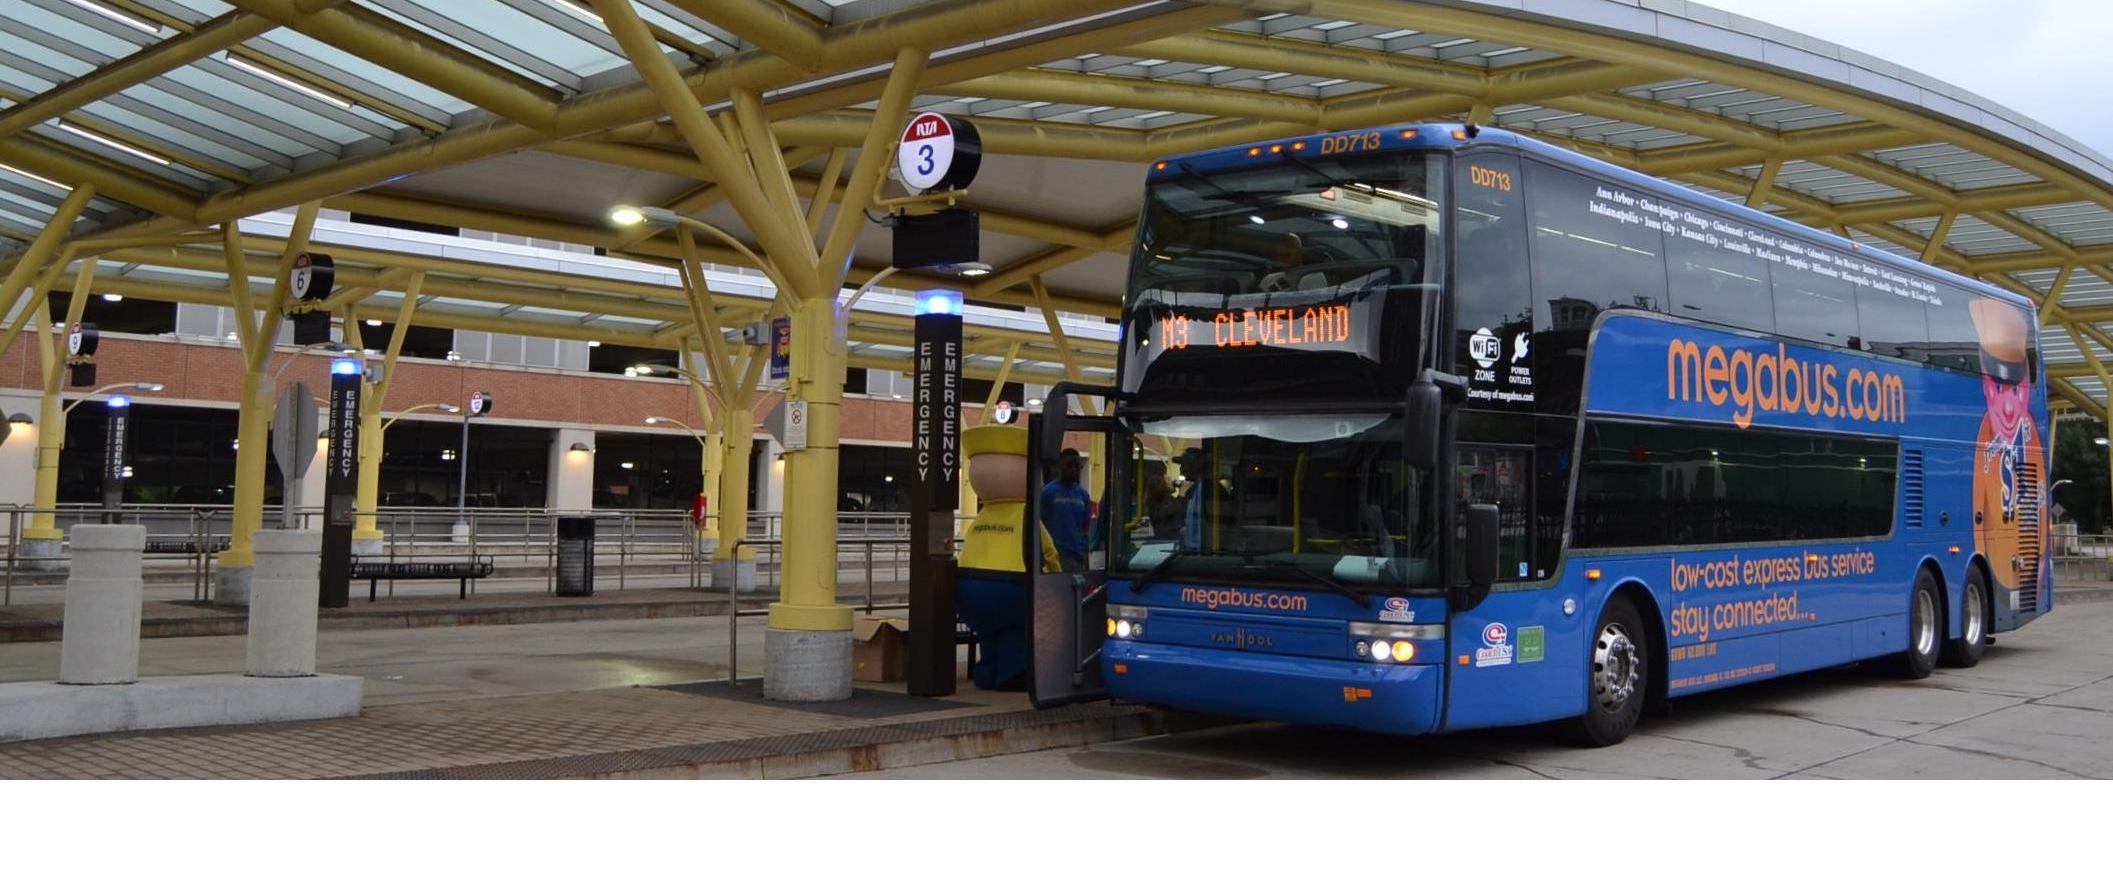  Aug 1: First Megabus left RTA's transit center this morning